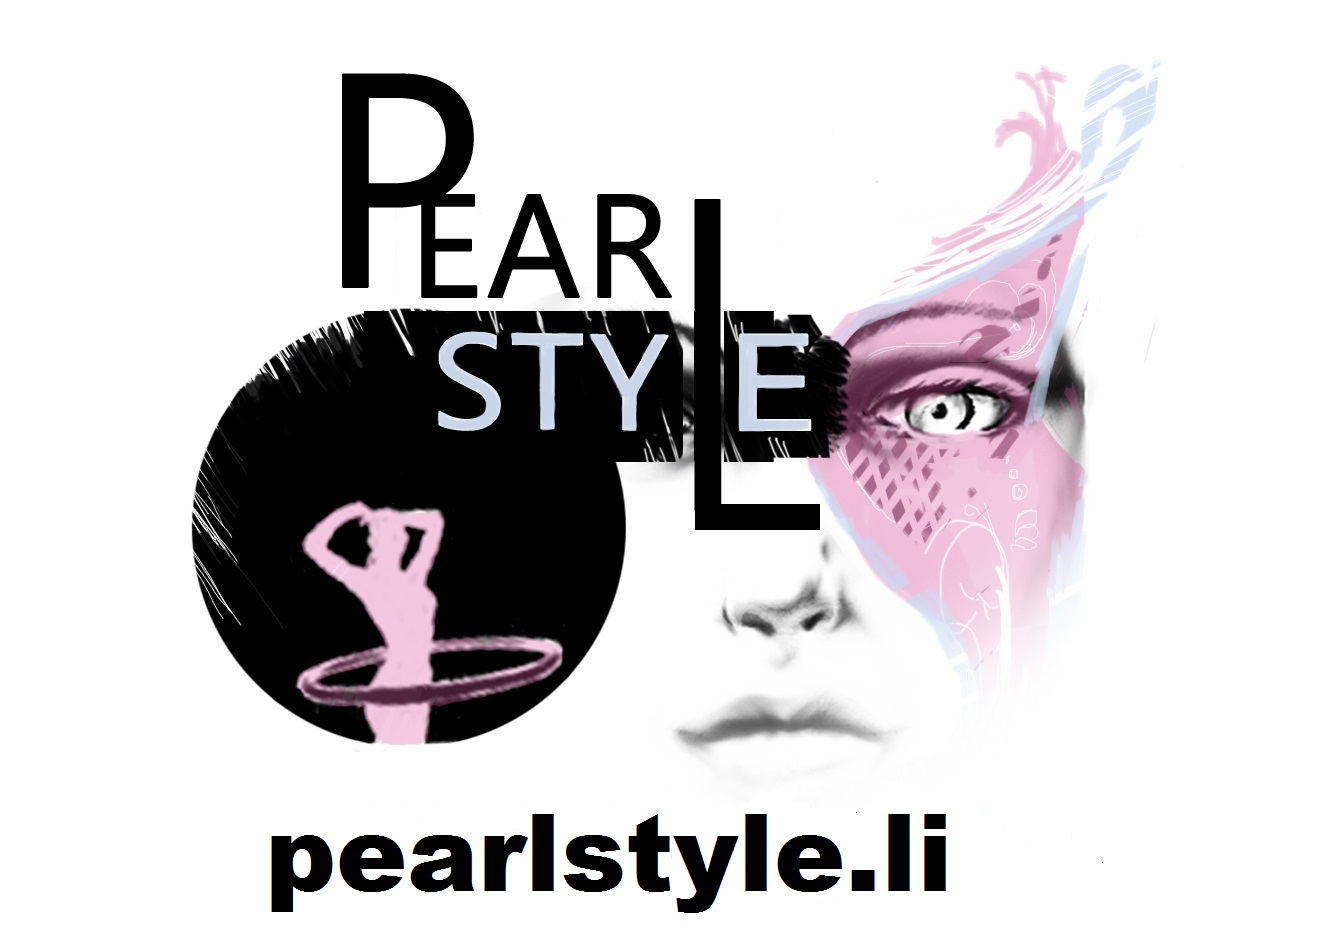 Pearl style, Geraldine-Pearl Siller-Gasser